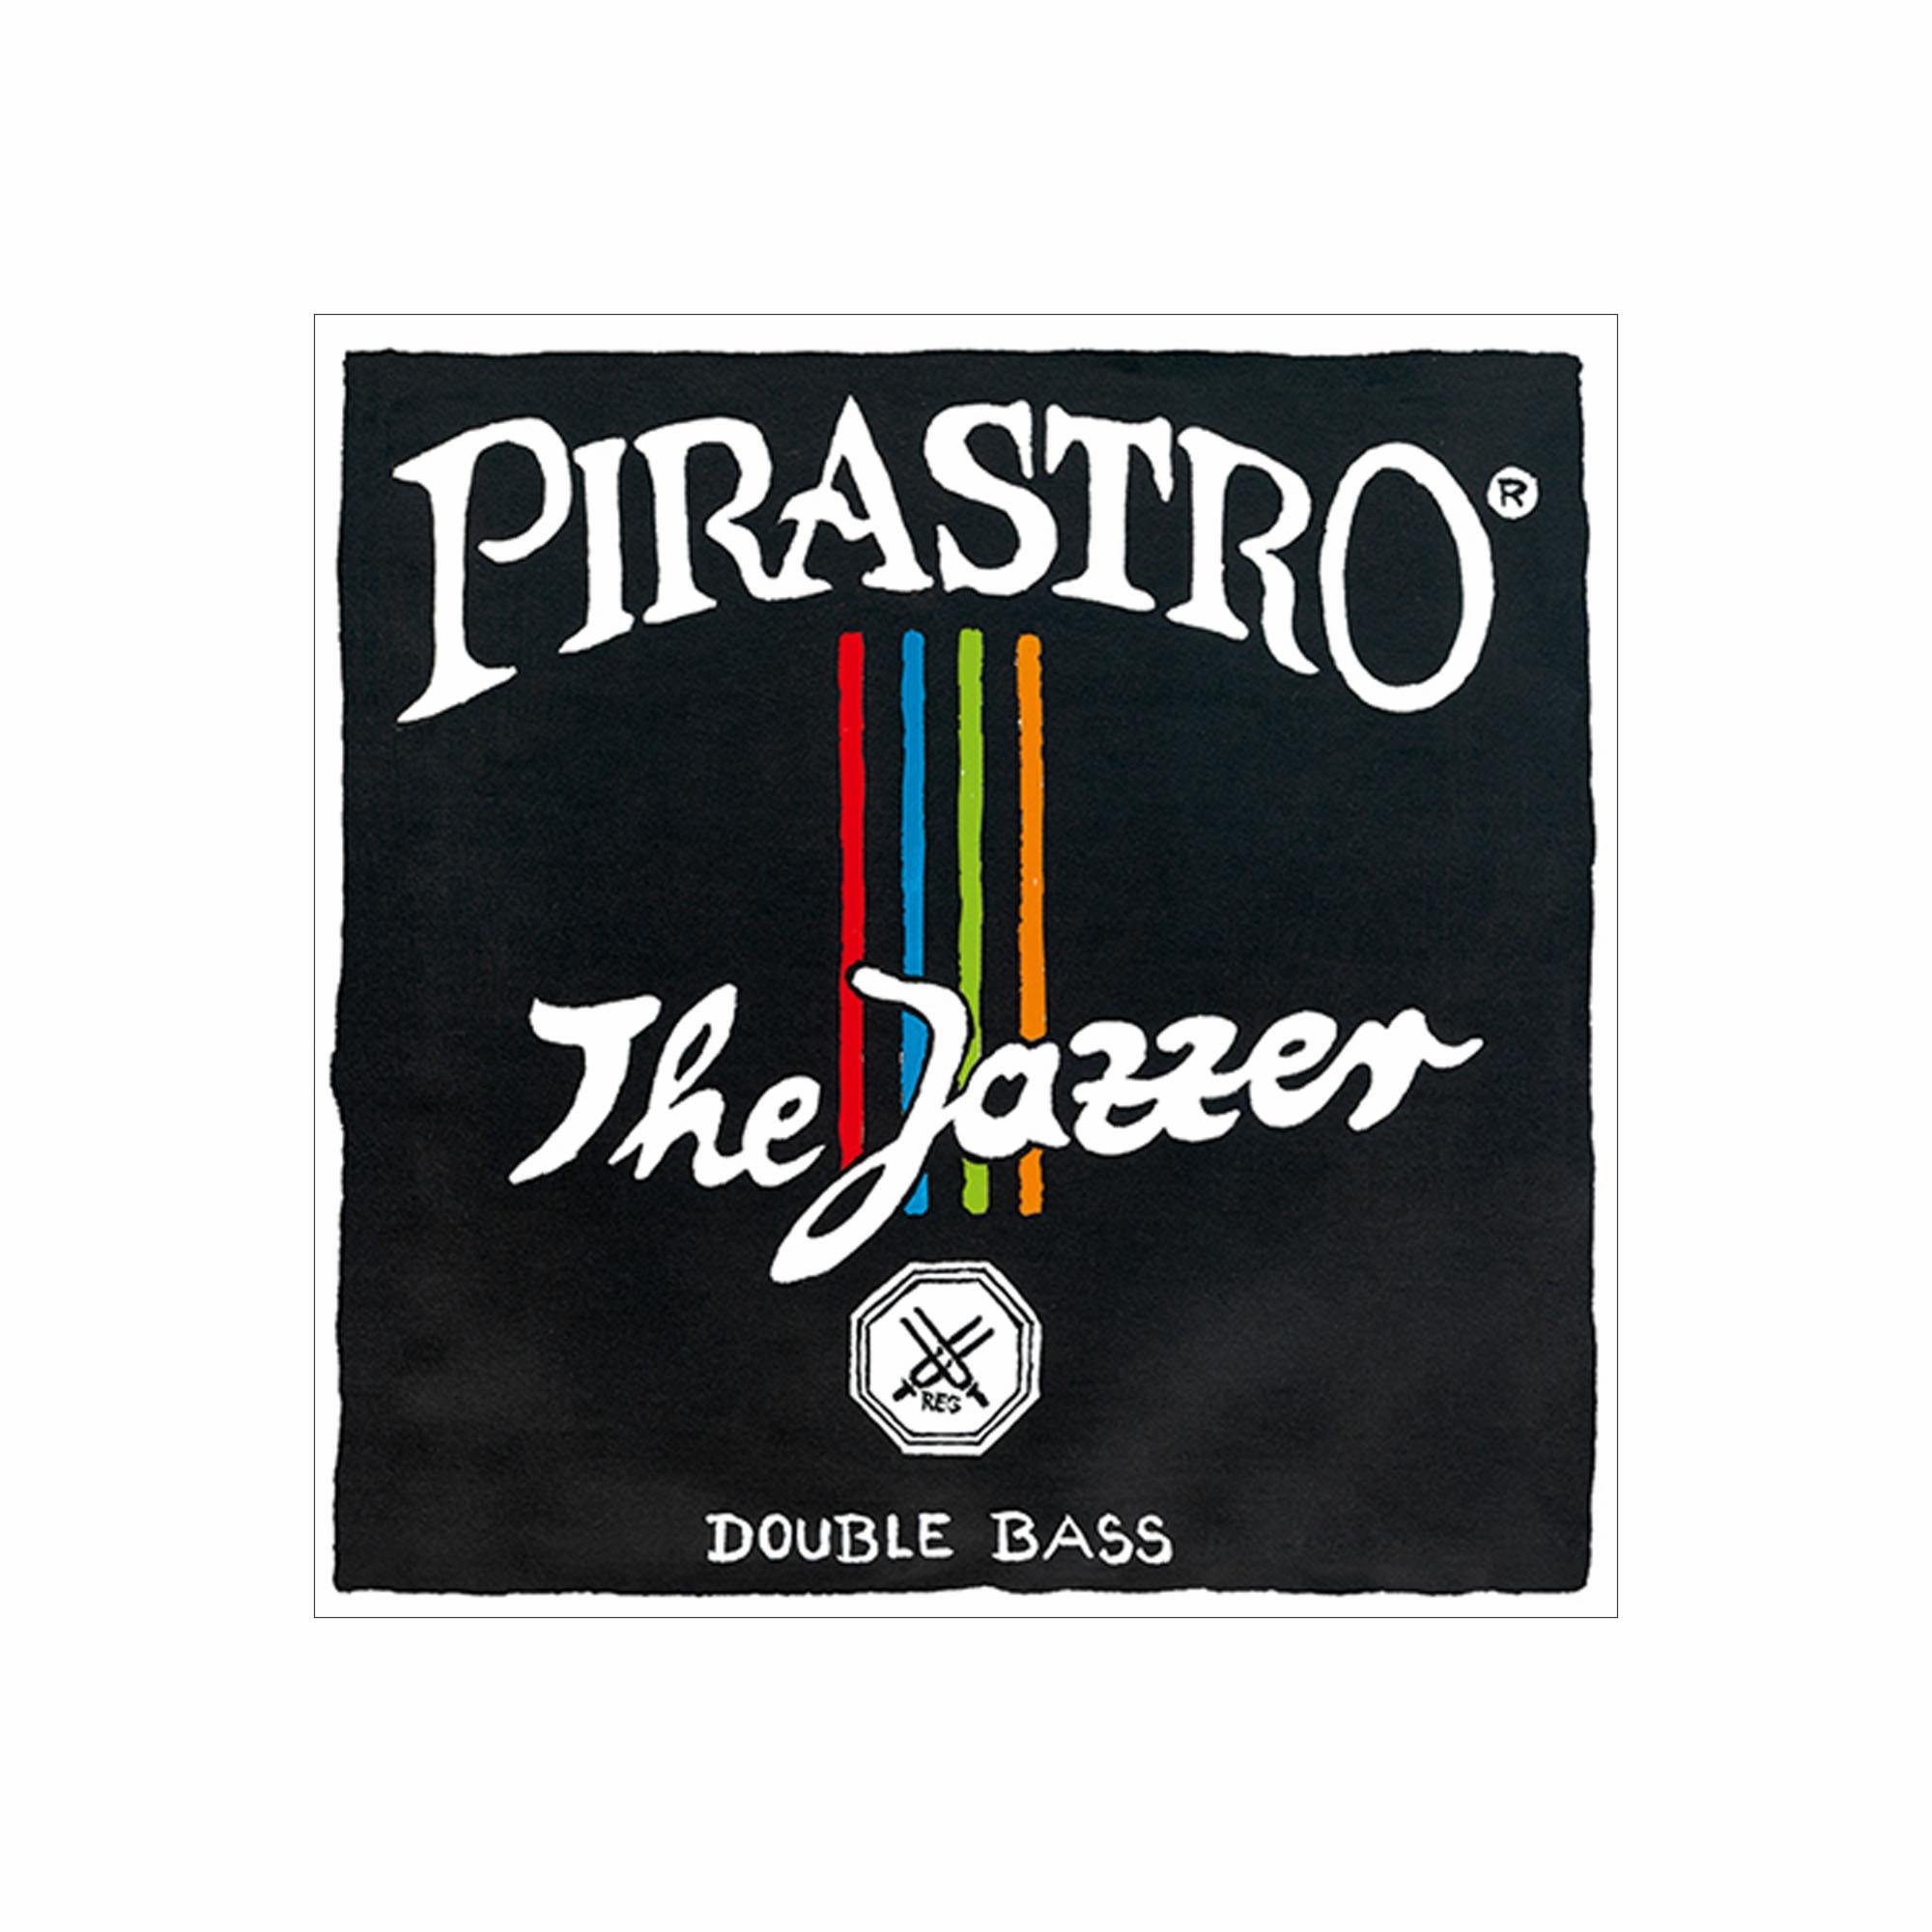 Pirastro Jazzer Bass Strings